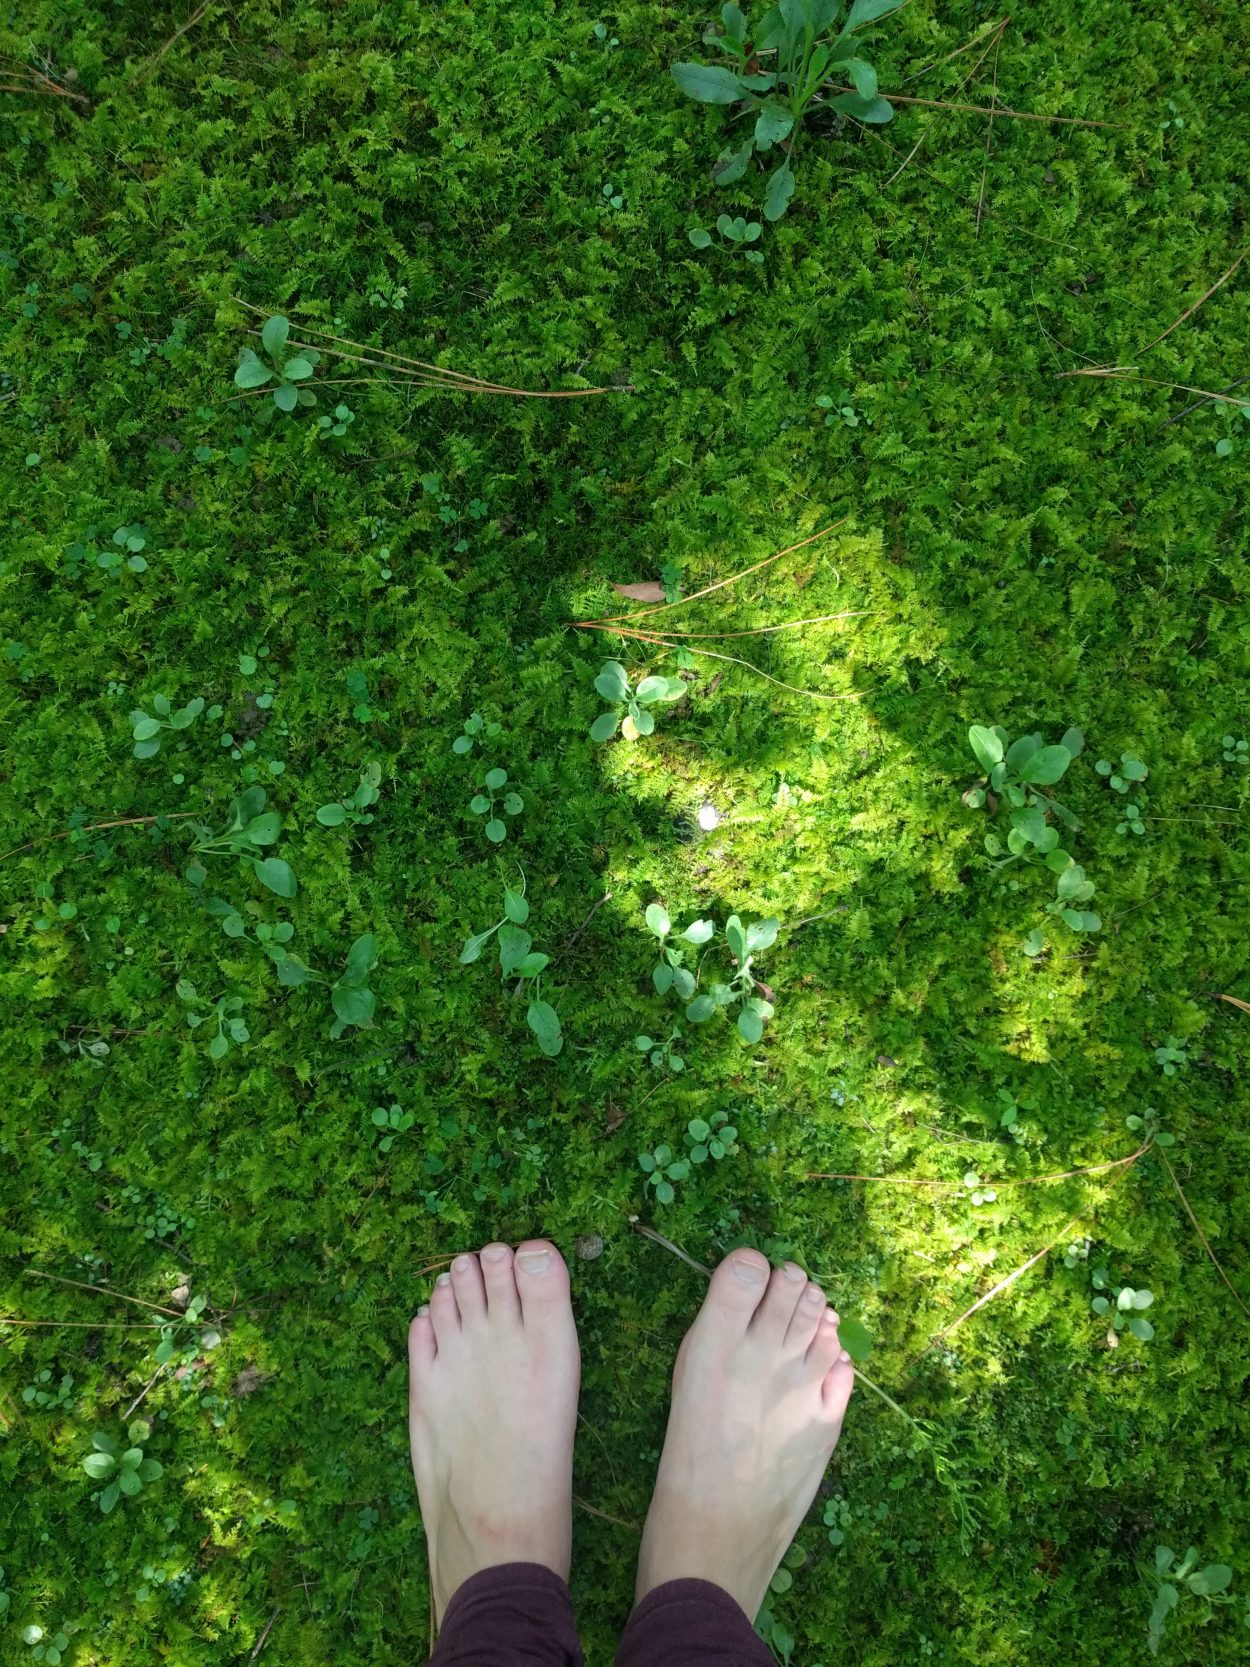 Moss, Small Wonder Beneath Our Feet